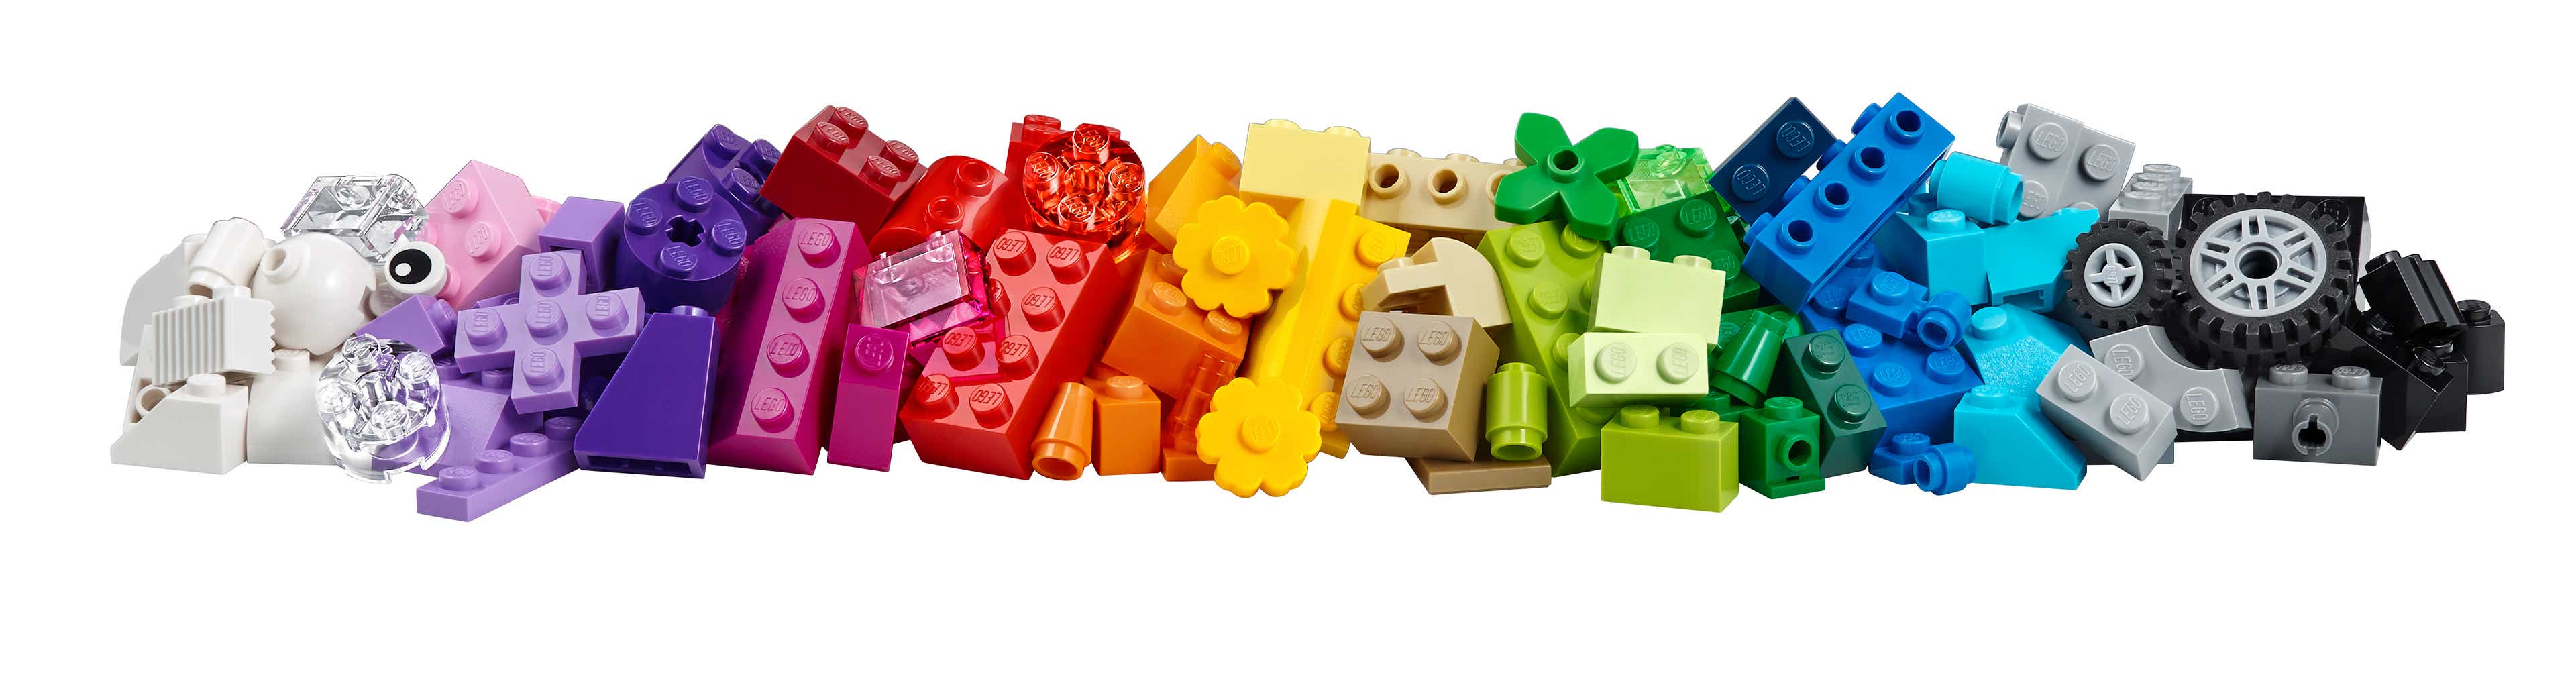 Newsroom - About us - LEGO.com US